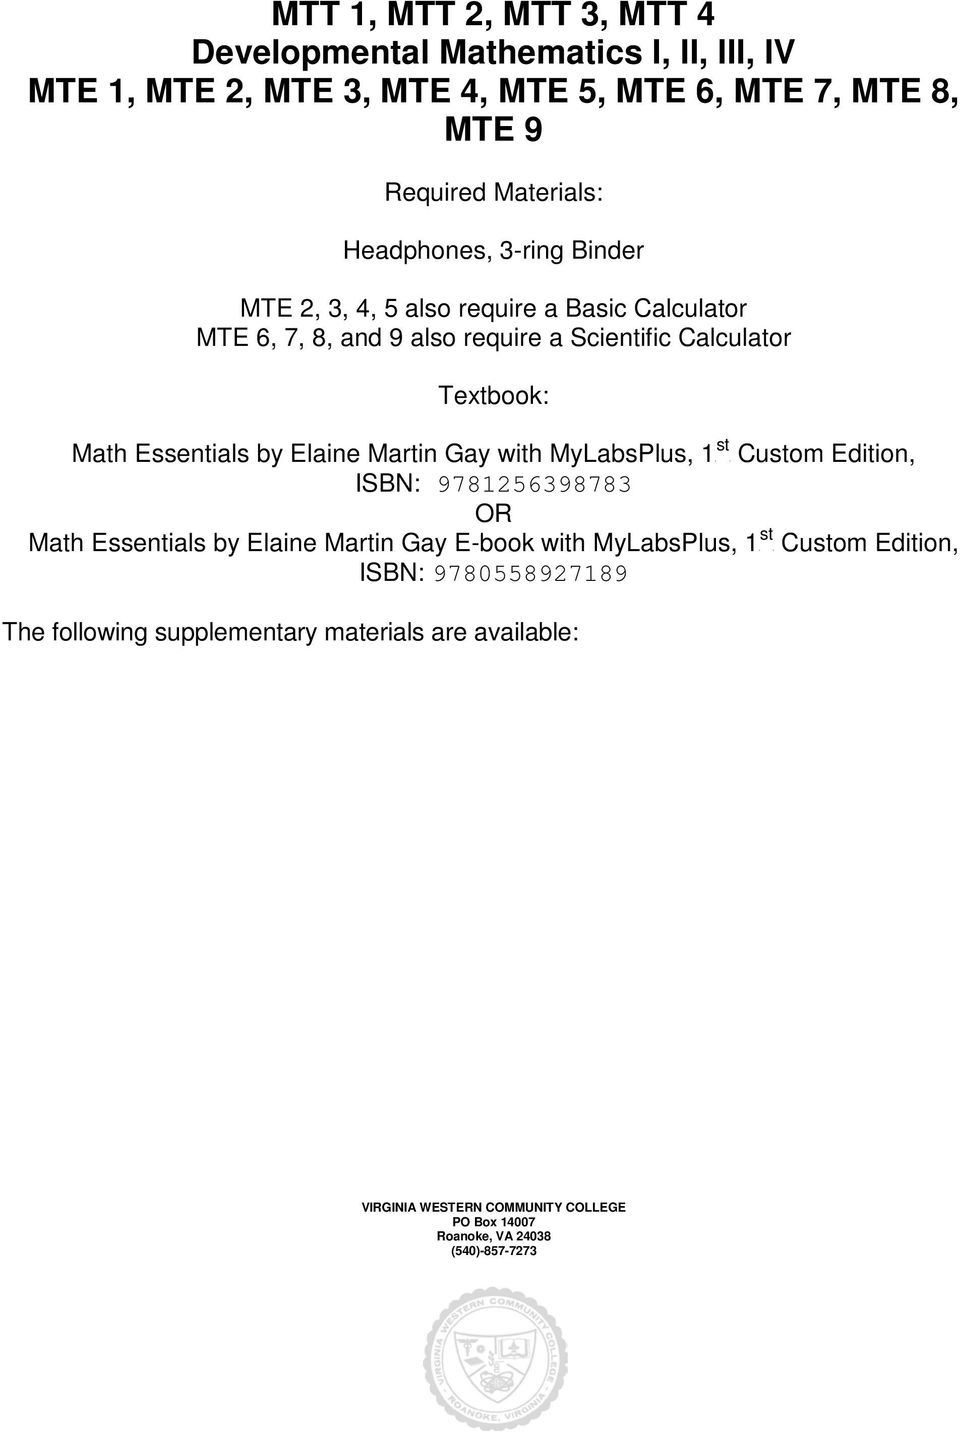 Scientific Calculator Textbook: Math Essentials by Elaine Martin Gay with MyLabsPlus, 1P Edition, ISBN: 9781256398783 OR st Math